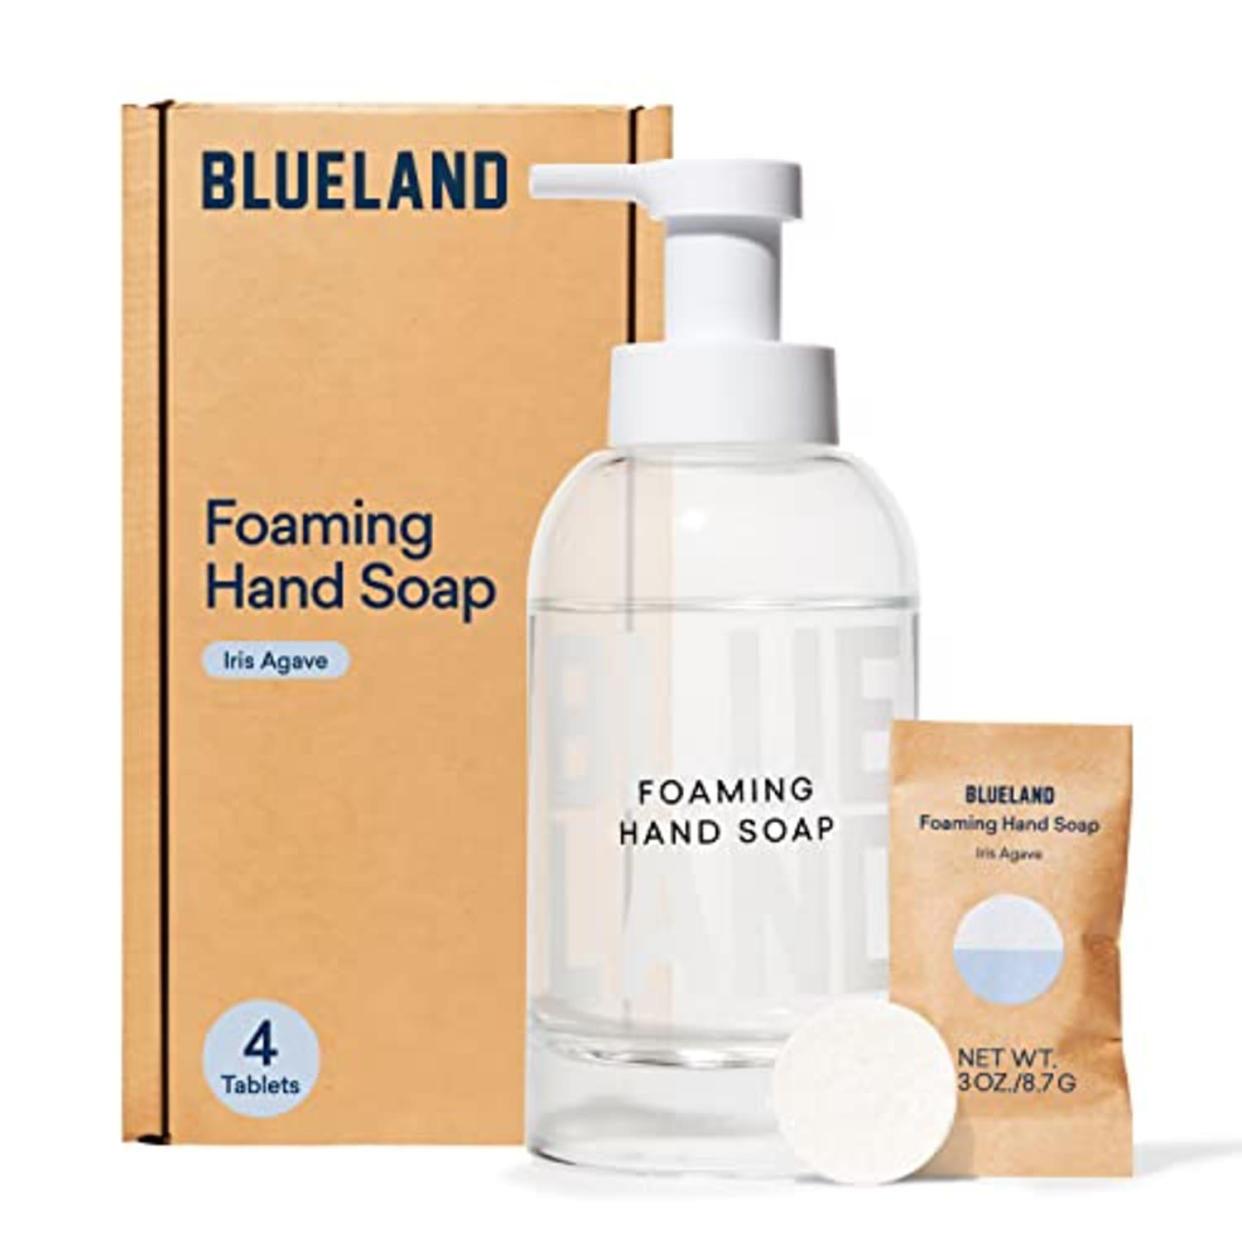 BLUELAND Hand Soap Starter Set - 1 Refillable Glass Foaming Hand Soap Dispenser + 4 Tablets Refills | Iris Agave Scent | Eco Friendly Hand Soap | Makes 4 x 9 Fl oz bottles (36 Fl oz total) (AMAZON)